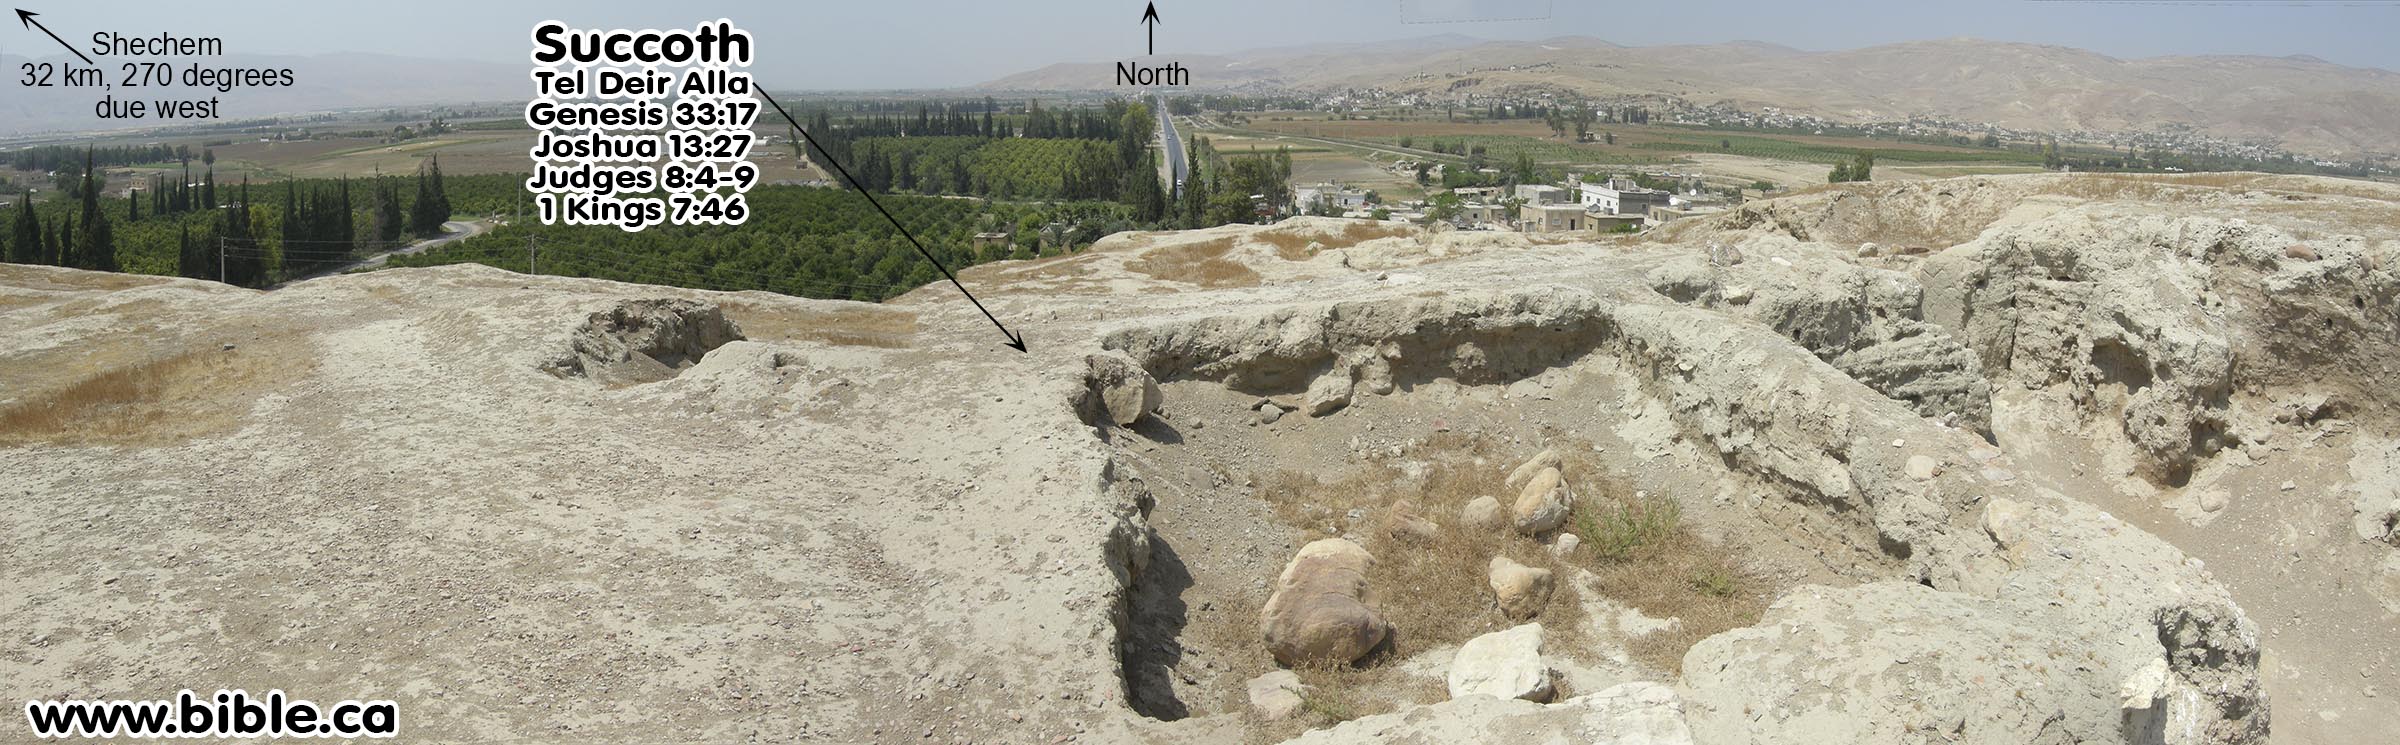 https://www.bible.ca/archeology/panorama-israel-archeology-succoth-deir-alla-balaam-th.jpg